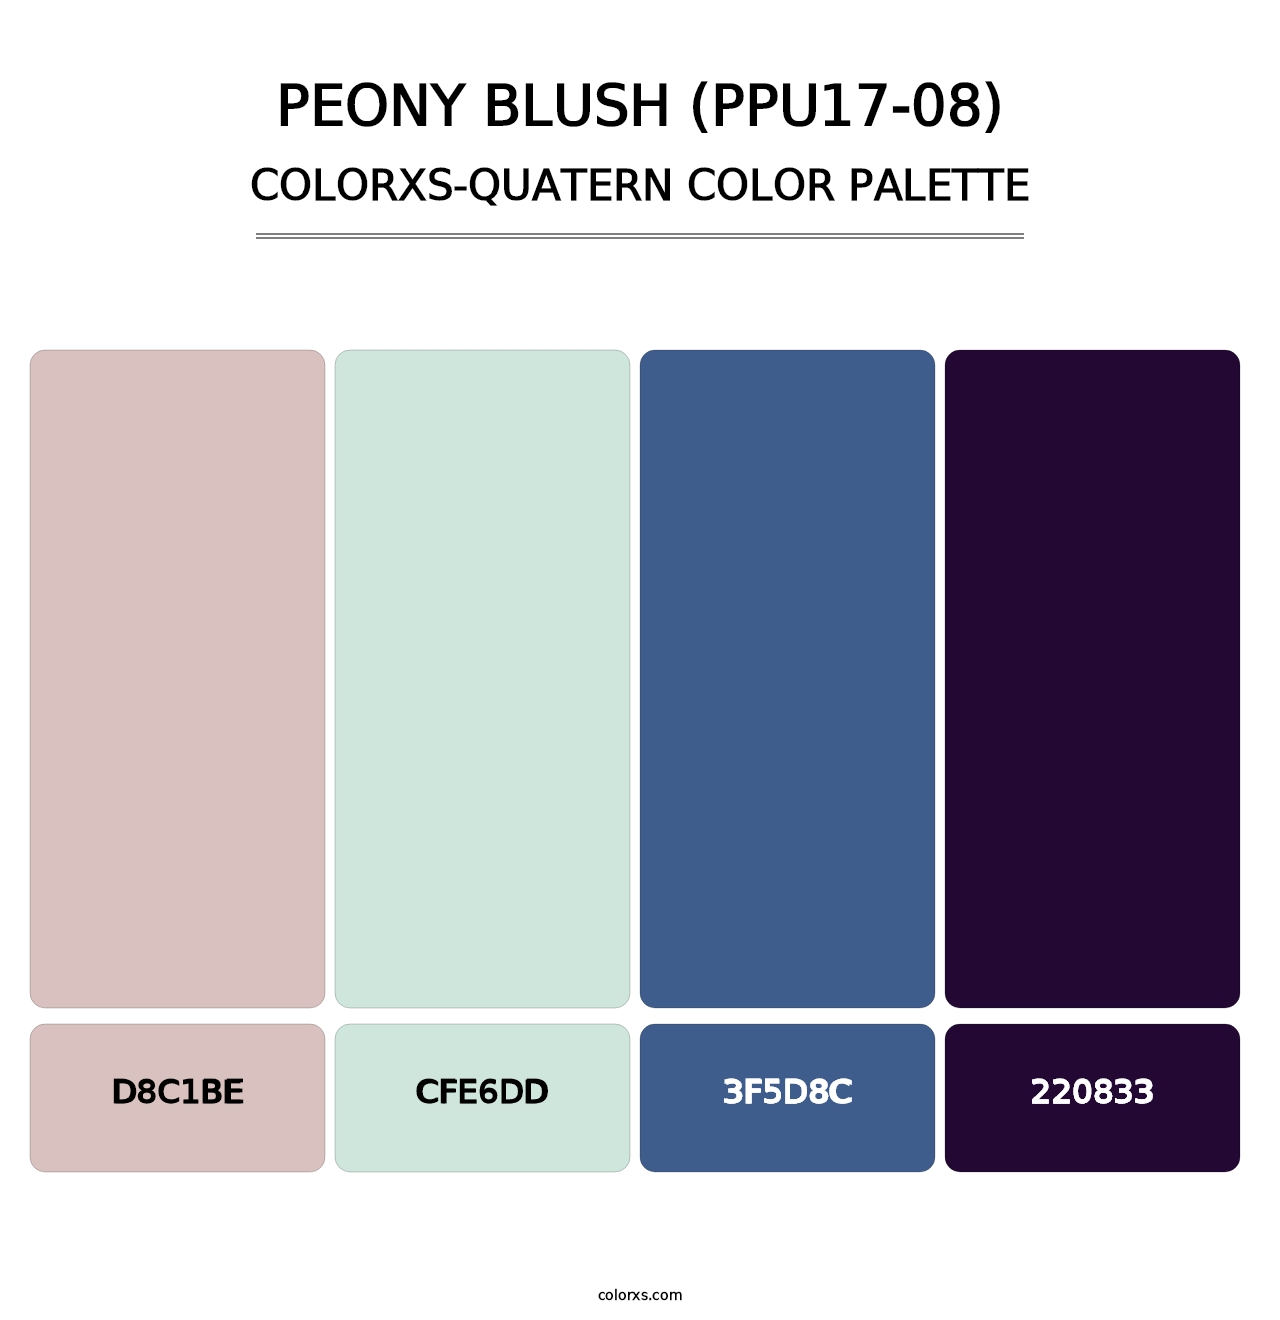 Peony Blush (PPU17-08) - Colorxs Quatern Palette